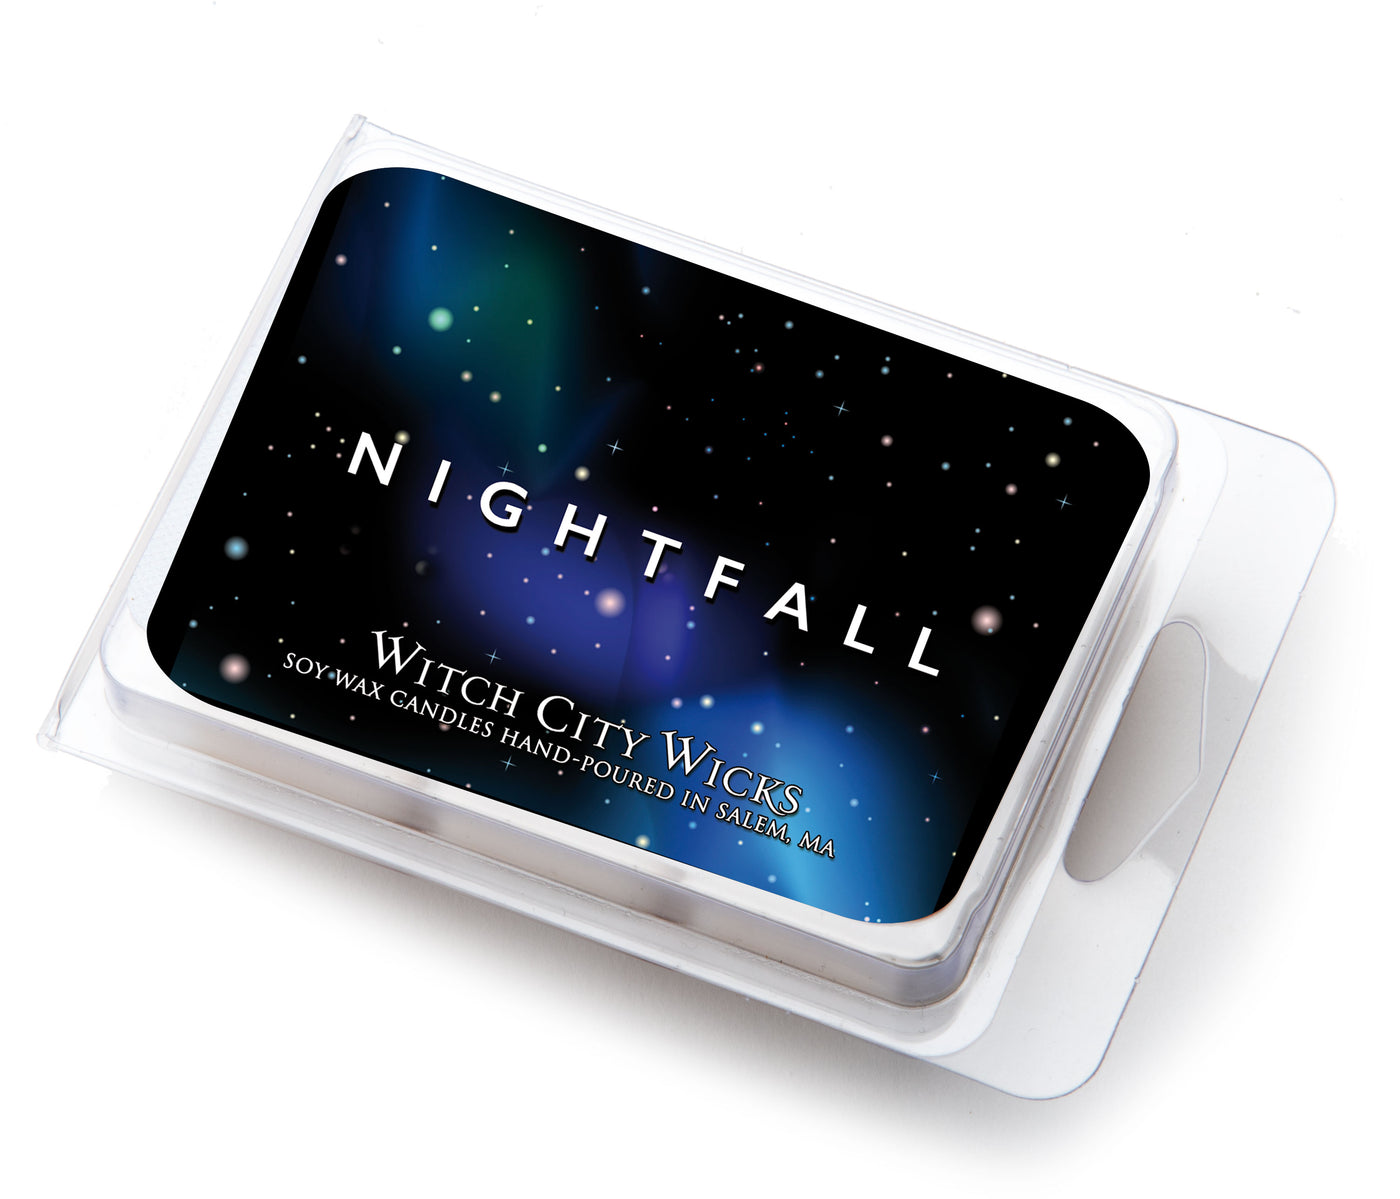 Nightfall wax melts